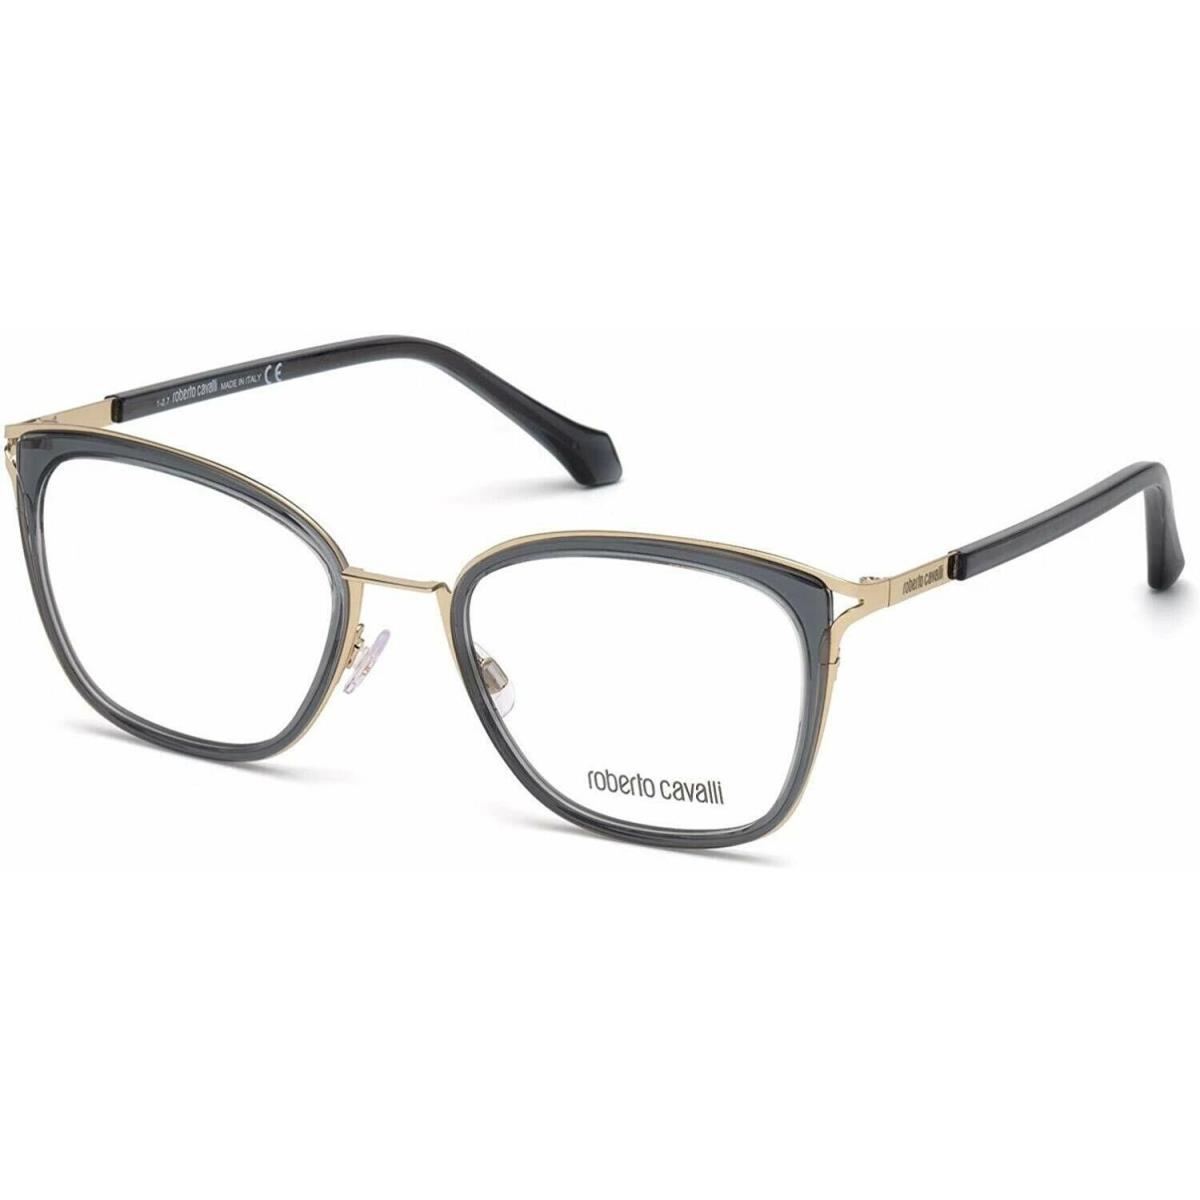 Roberto Cavalli Eyeglasses Maremma 5071 020 Gray Full Rim Frame 52MM Rx-able